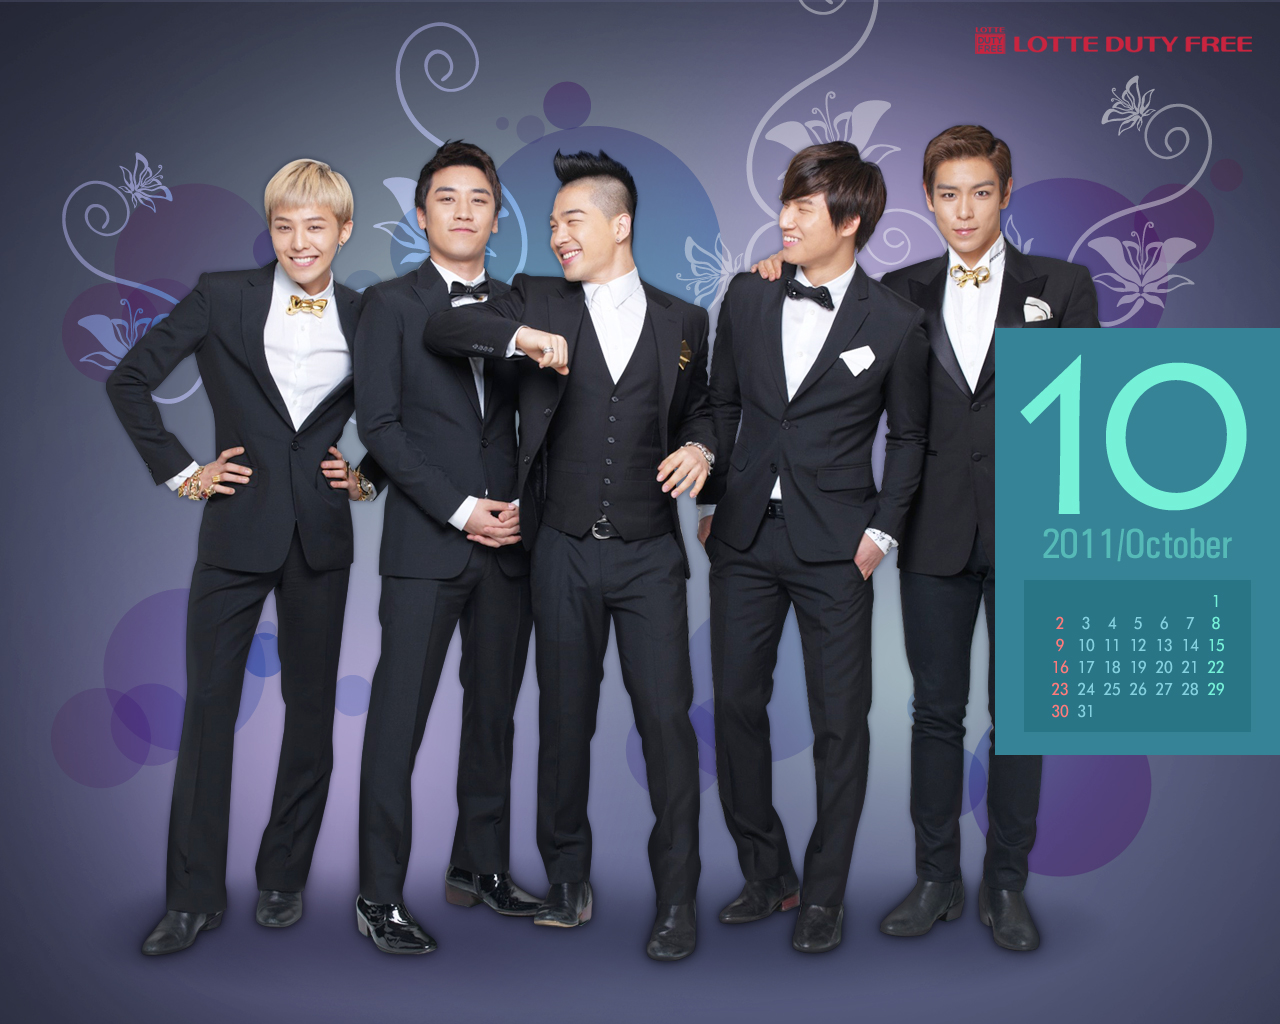 Lotte Duty Free Official 壁紙 Calendar Bigbang 壁紙 ファンポップ